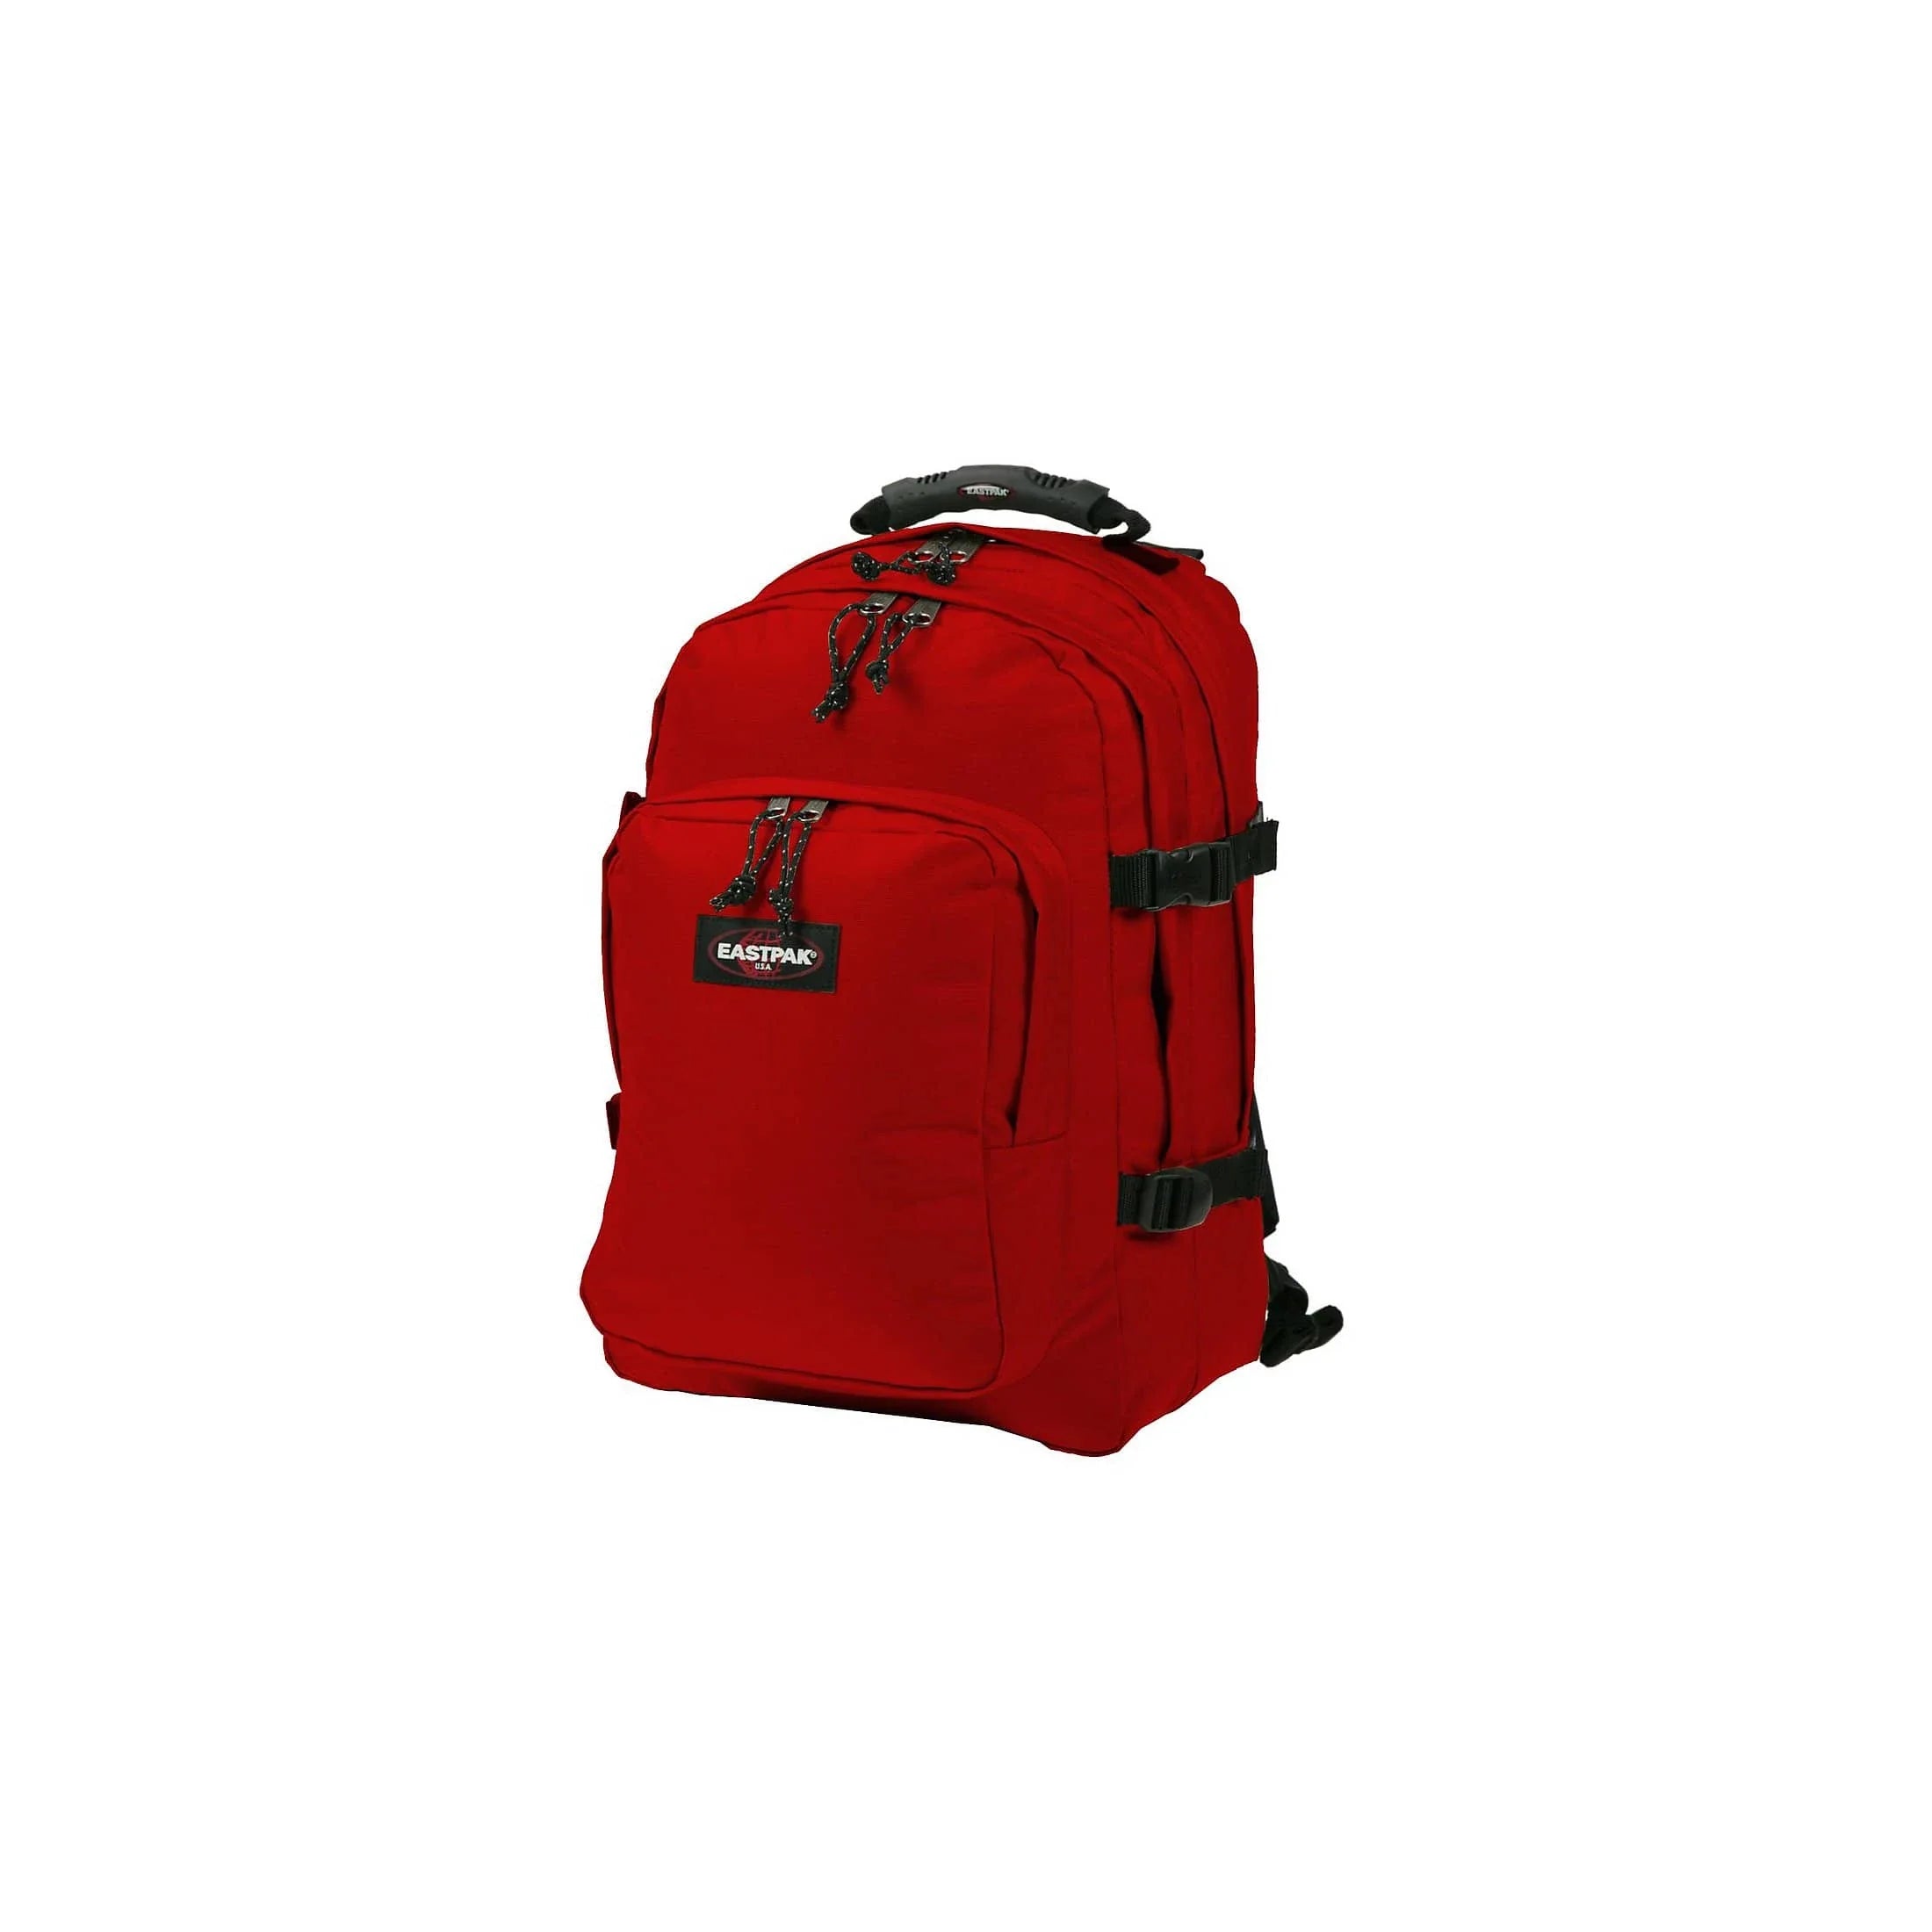 Eastpak Authentic Provider Laptop Backpack 44 cm - sunday gray